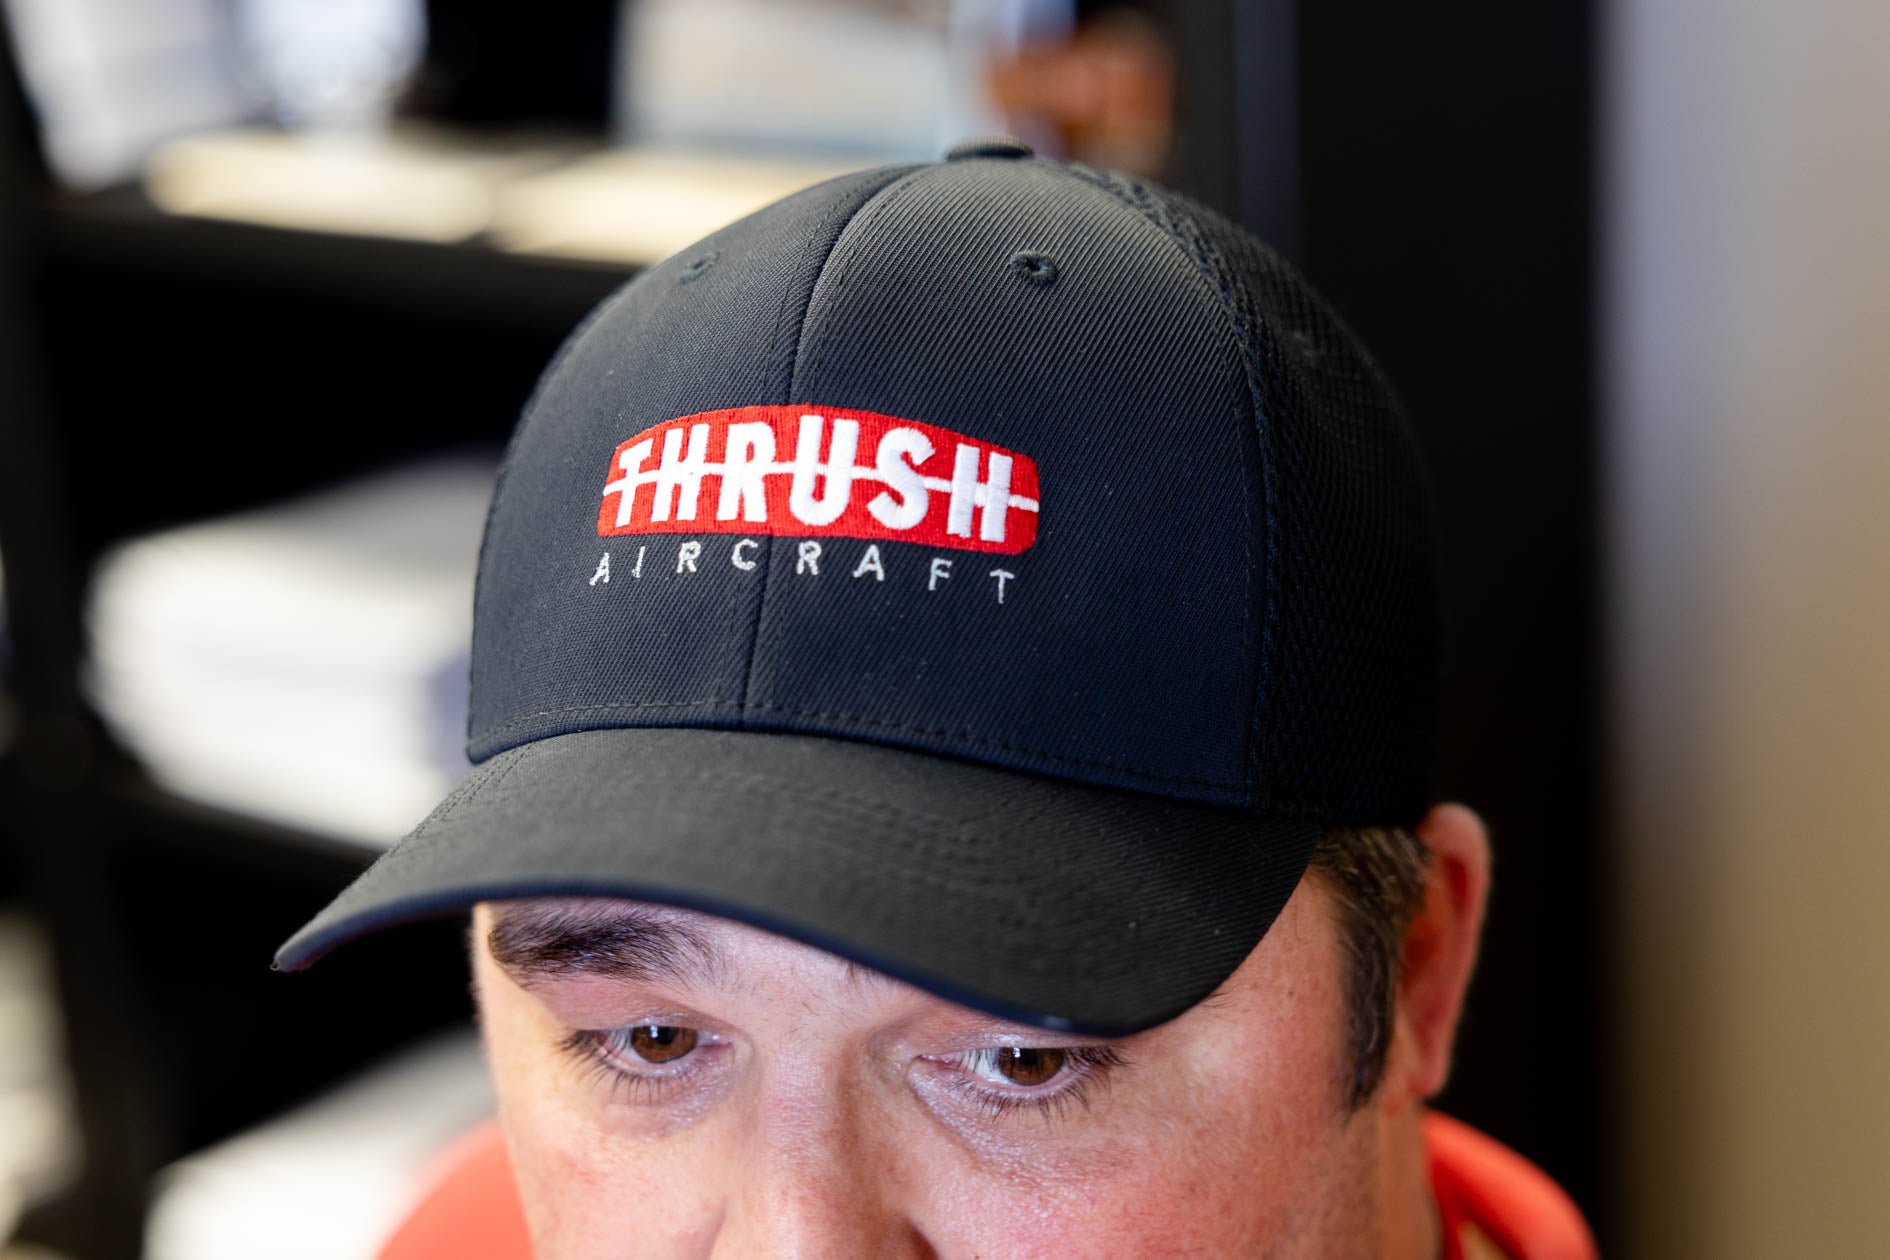 Thrush Aircraft Flex Fit Hat (Mesh Back)